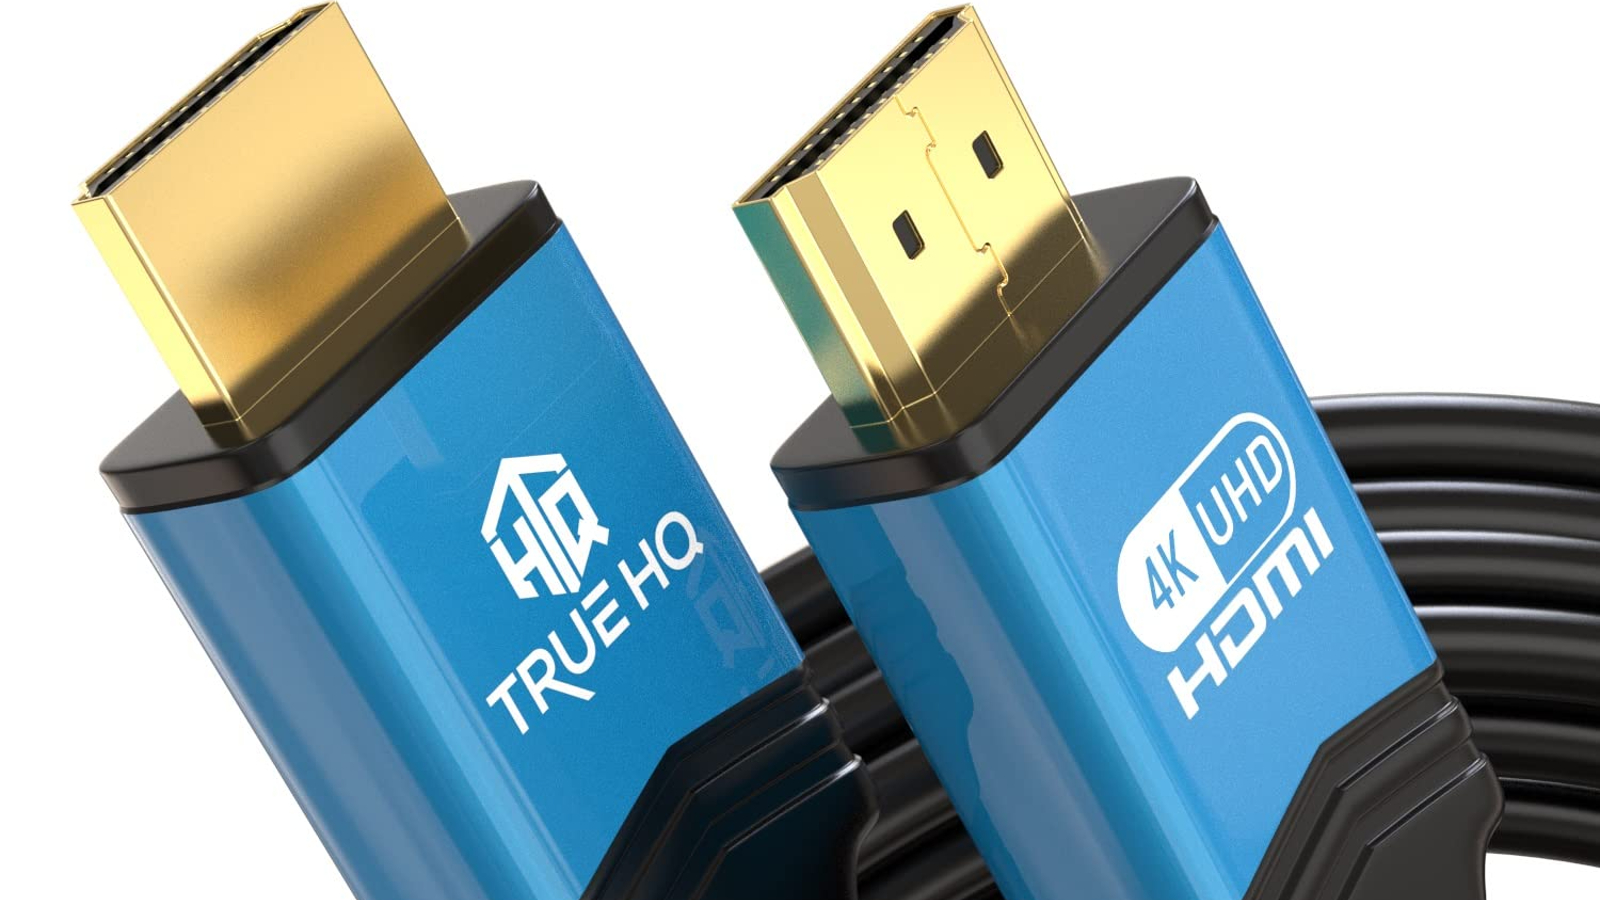 True HQ 20m HDMI Cable - Best HDMI cable for long distances